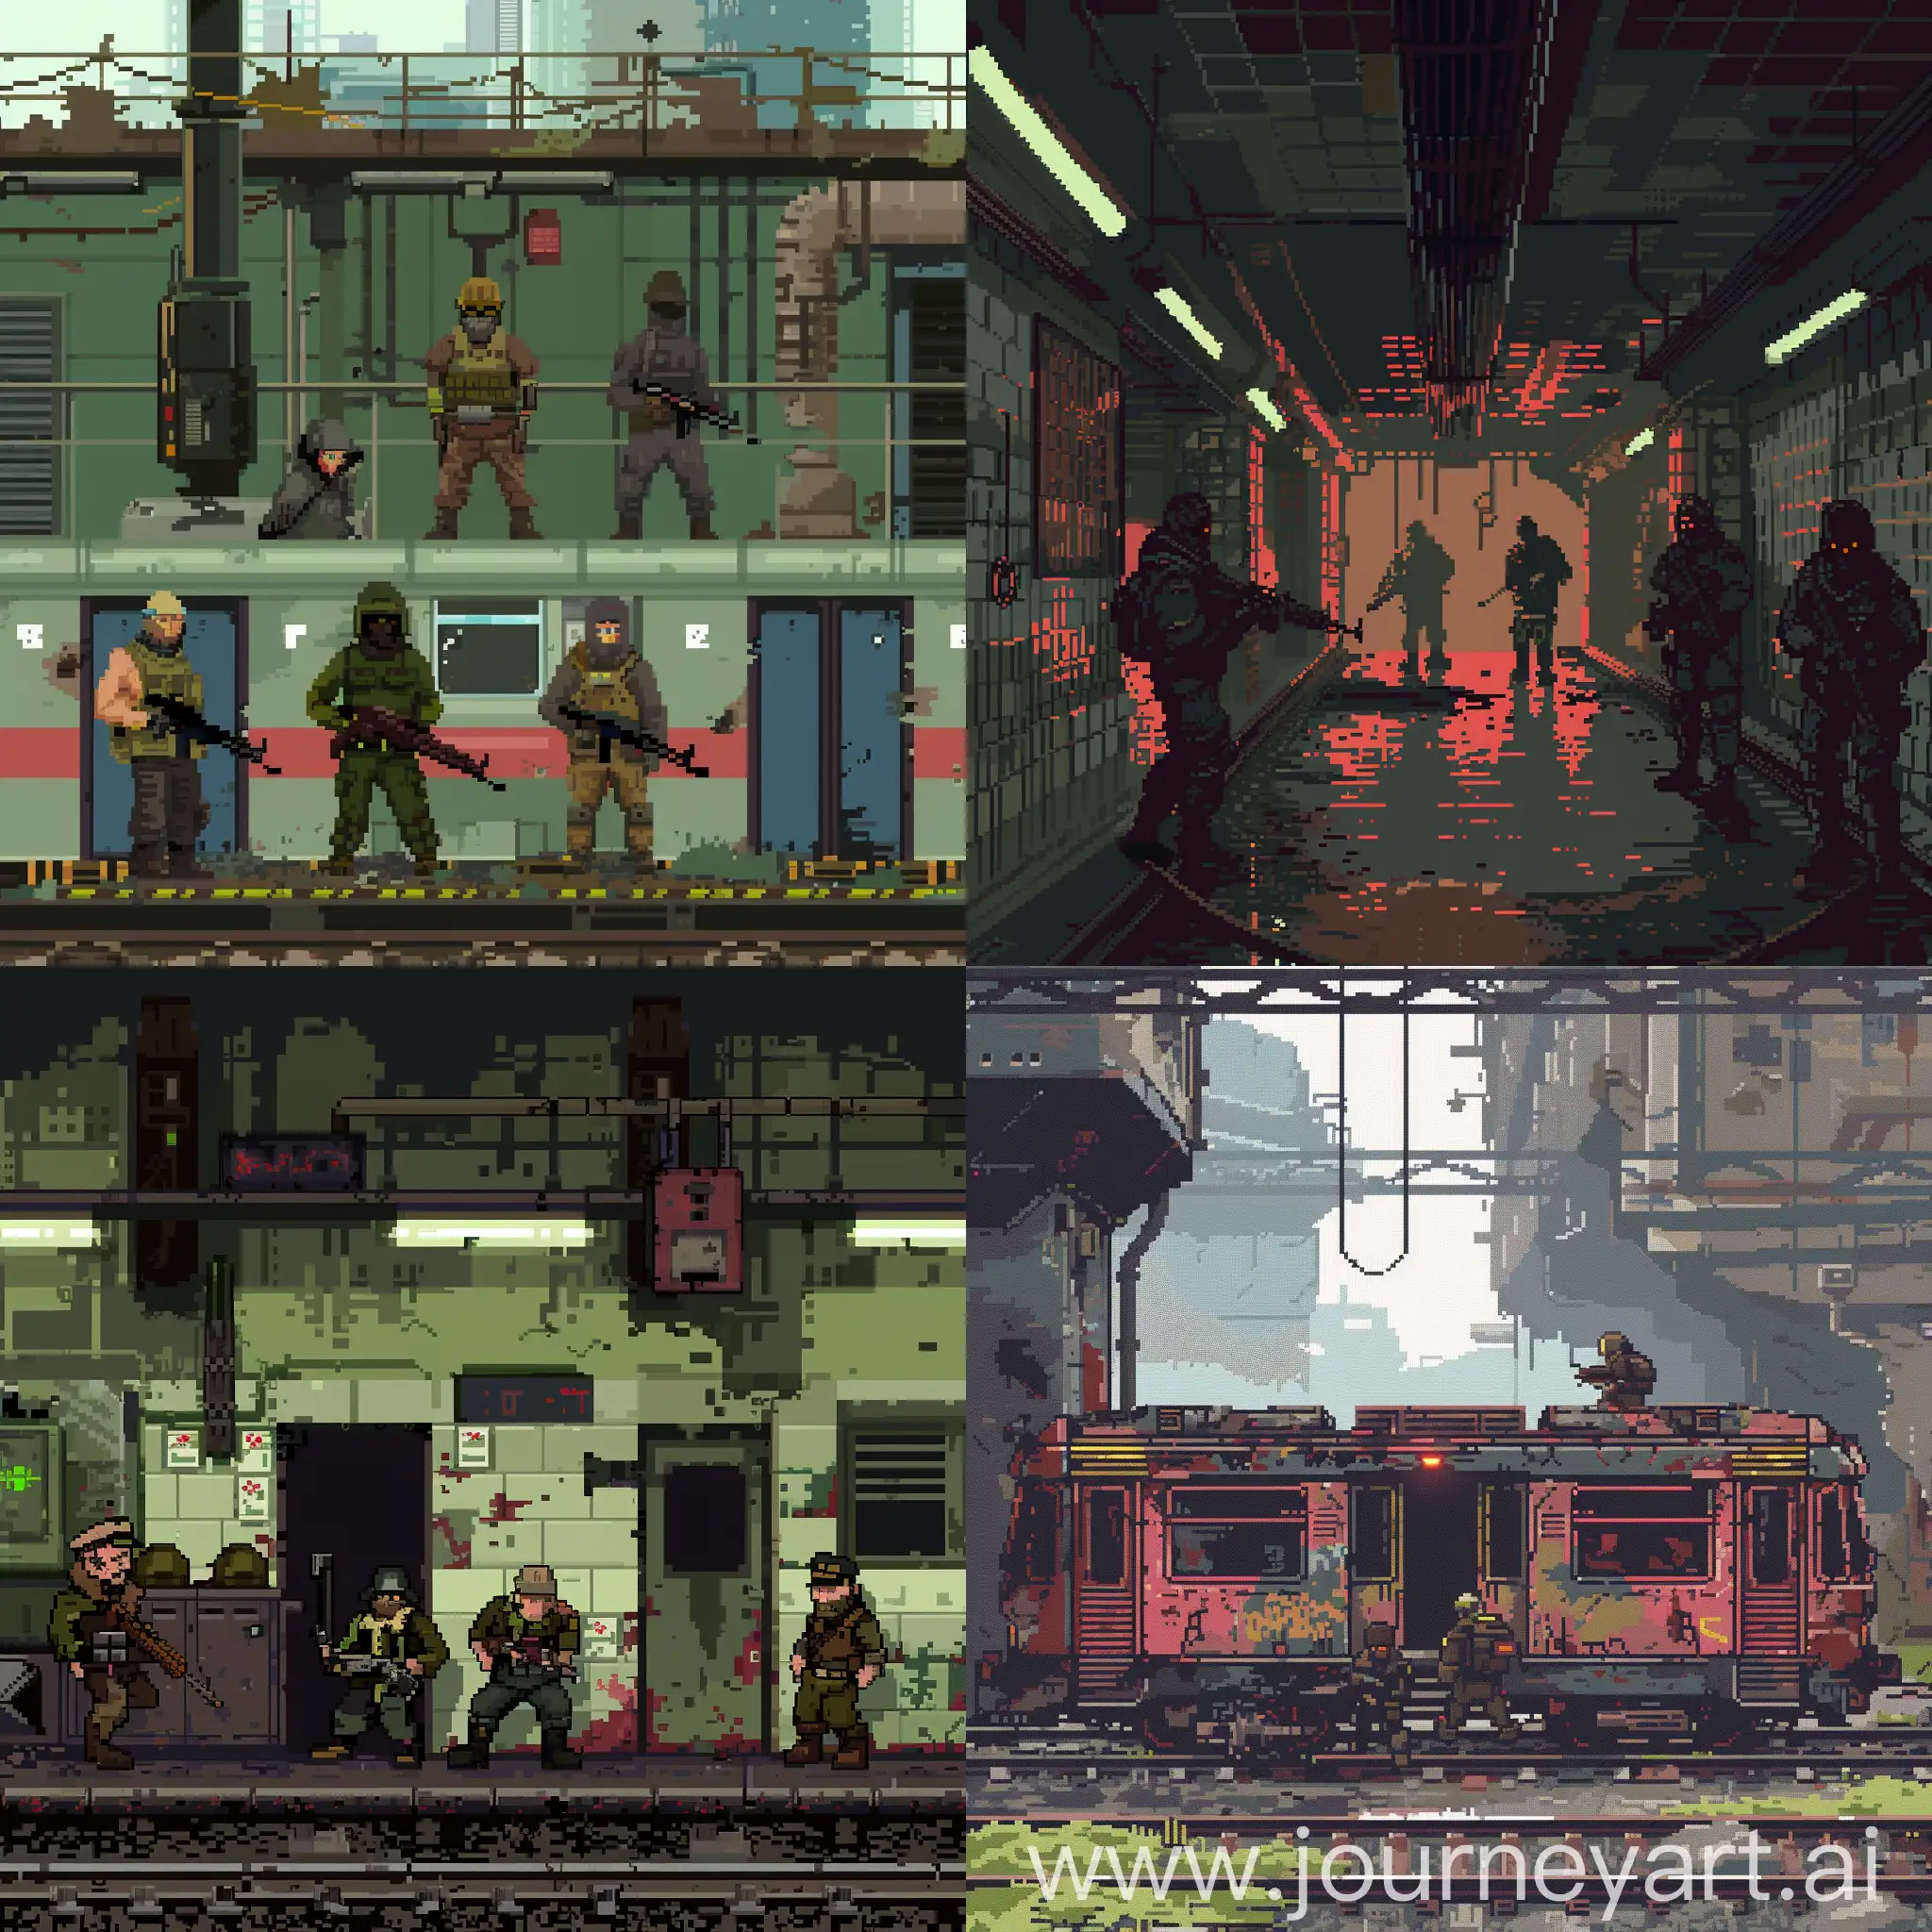 PostApocalyptic-Underground-Metro-Encounter-with-Human-Bandits-Pixel-Art